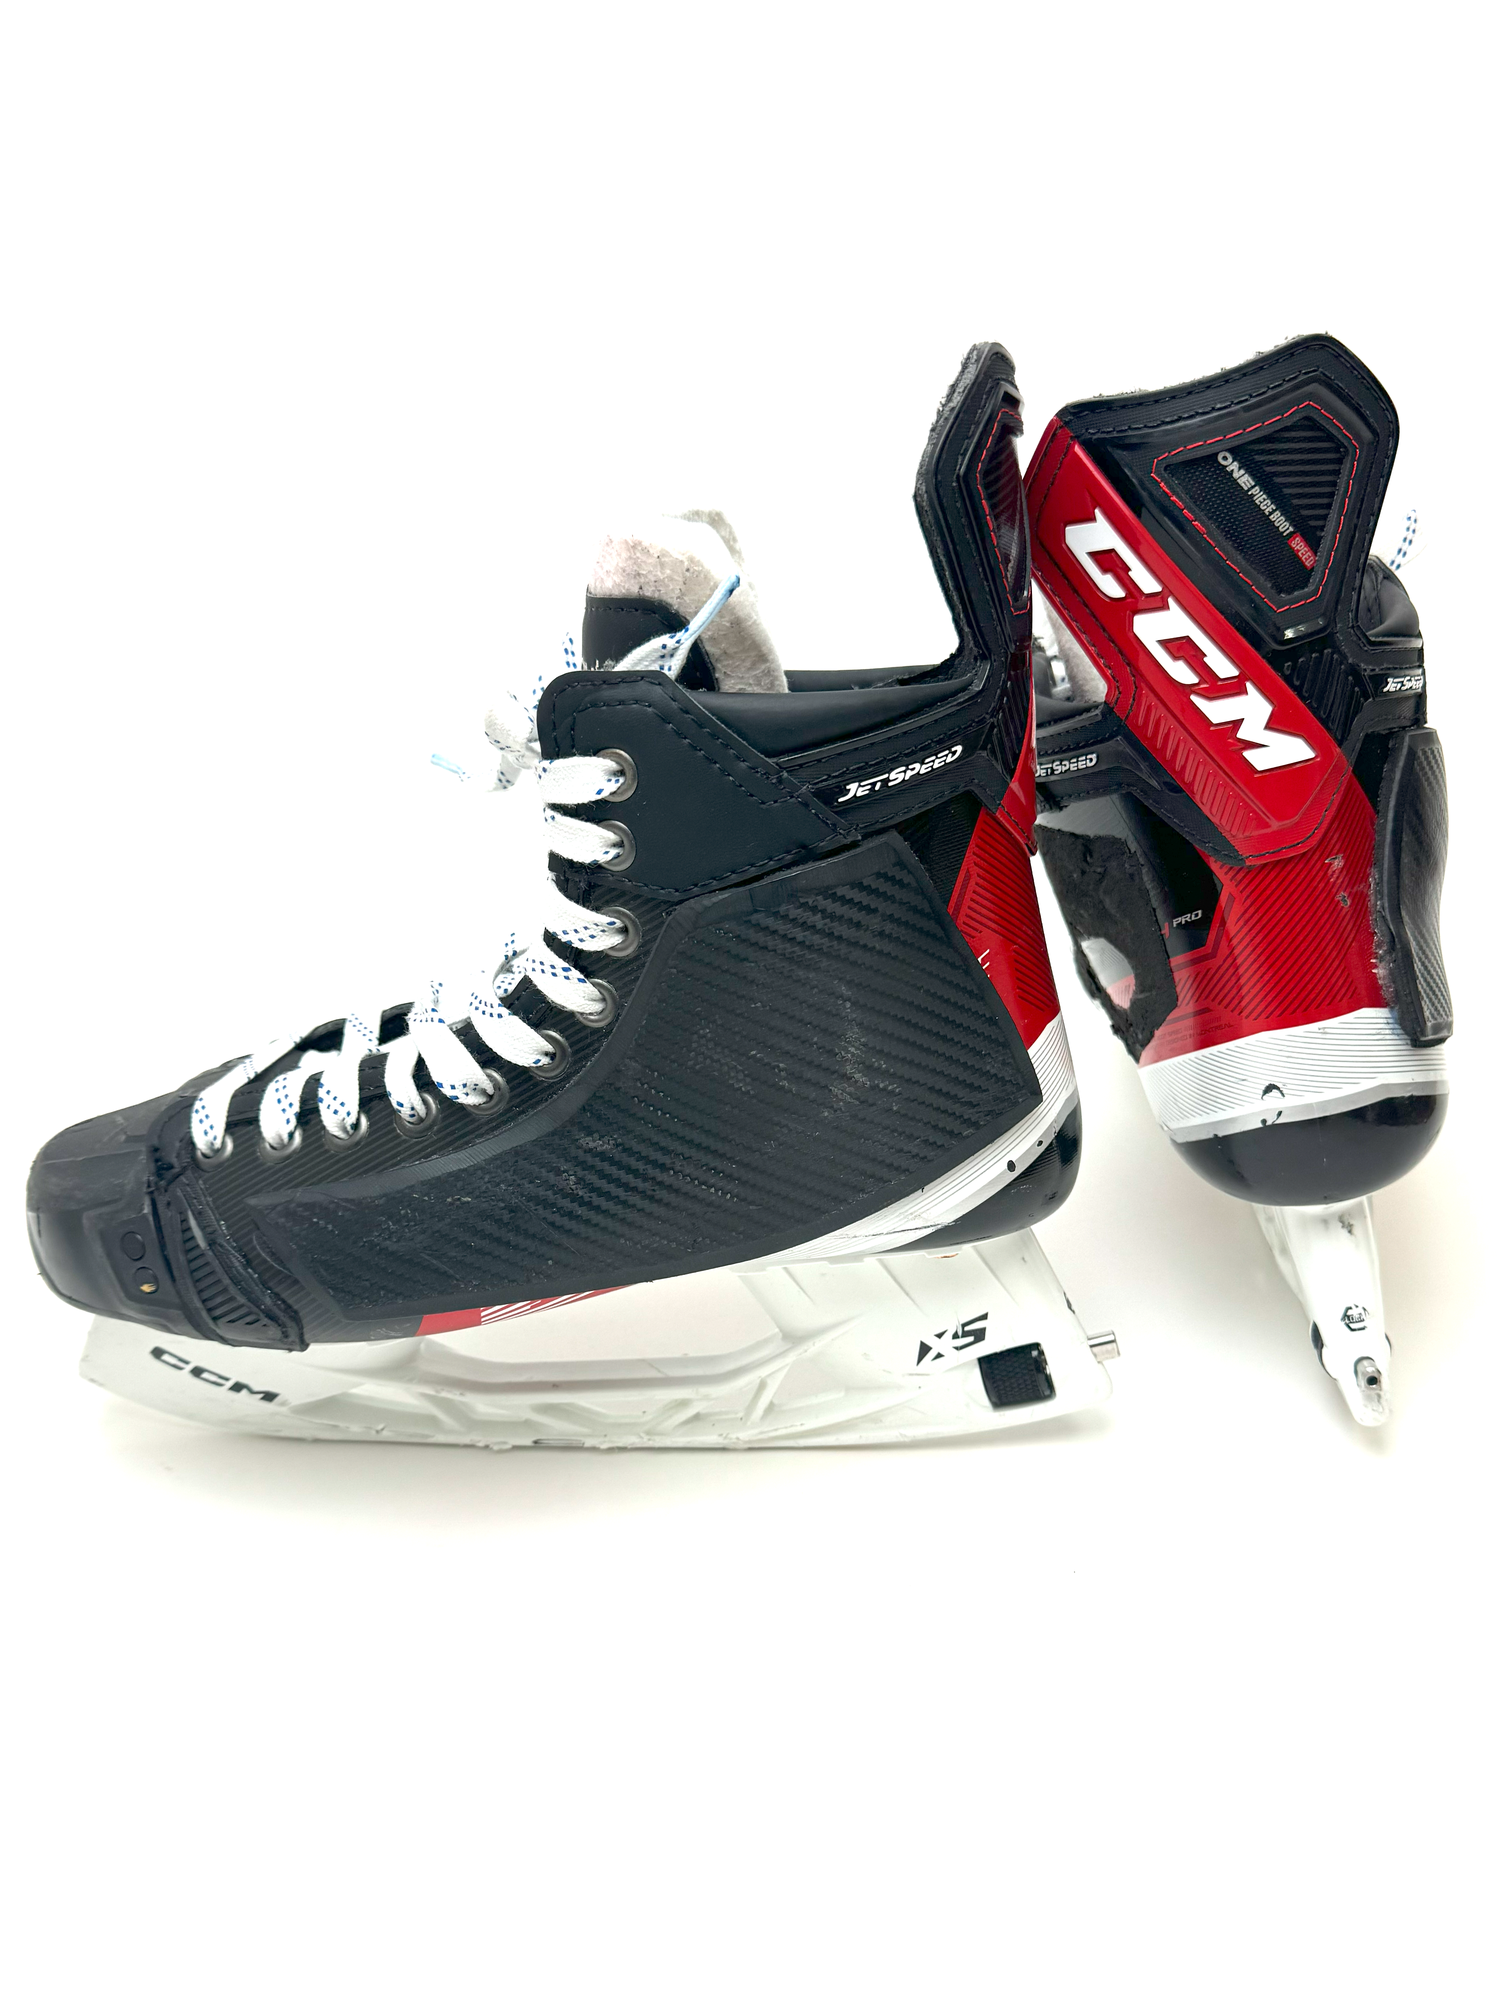 CCM Jetspeed FT4 Pro Skates Size 9 D